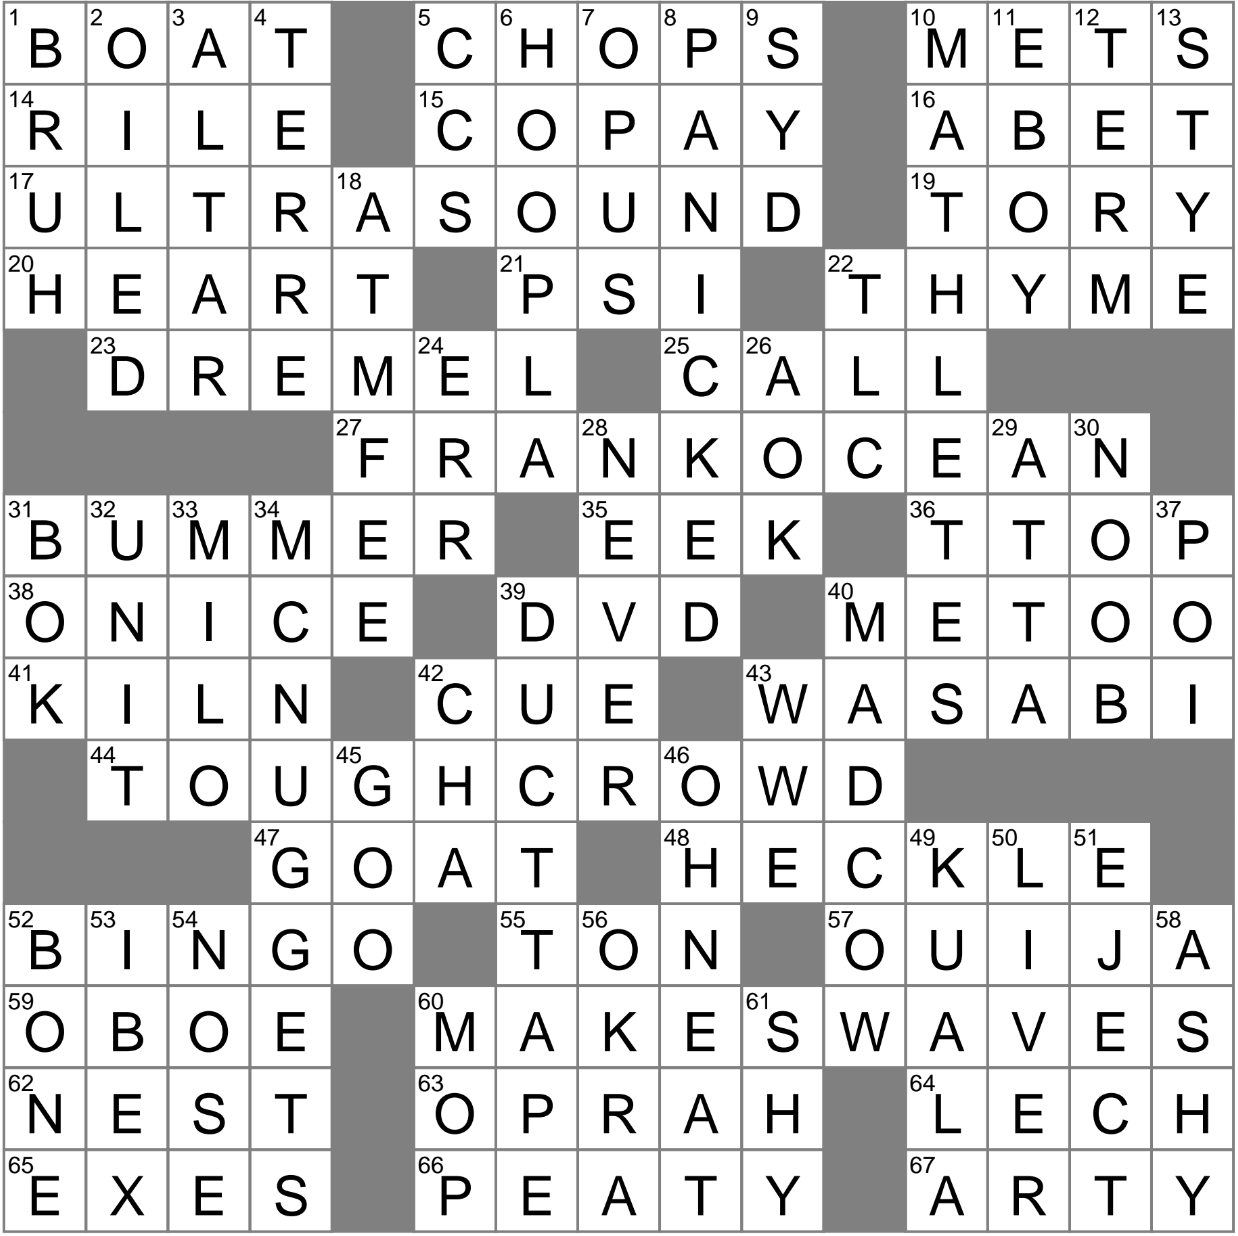 LA Times Crossword 19 Dec 22 Monday LAXCrossword com